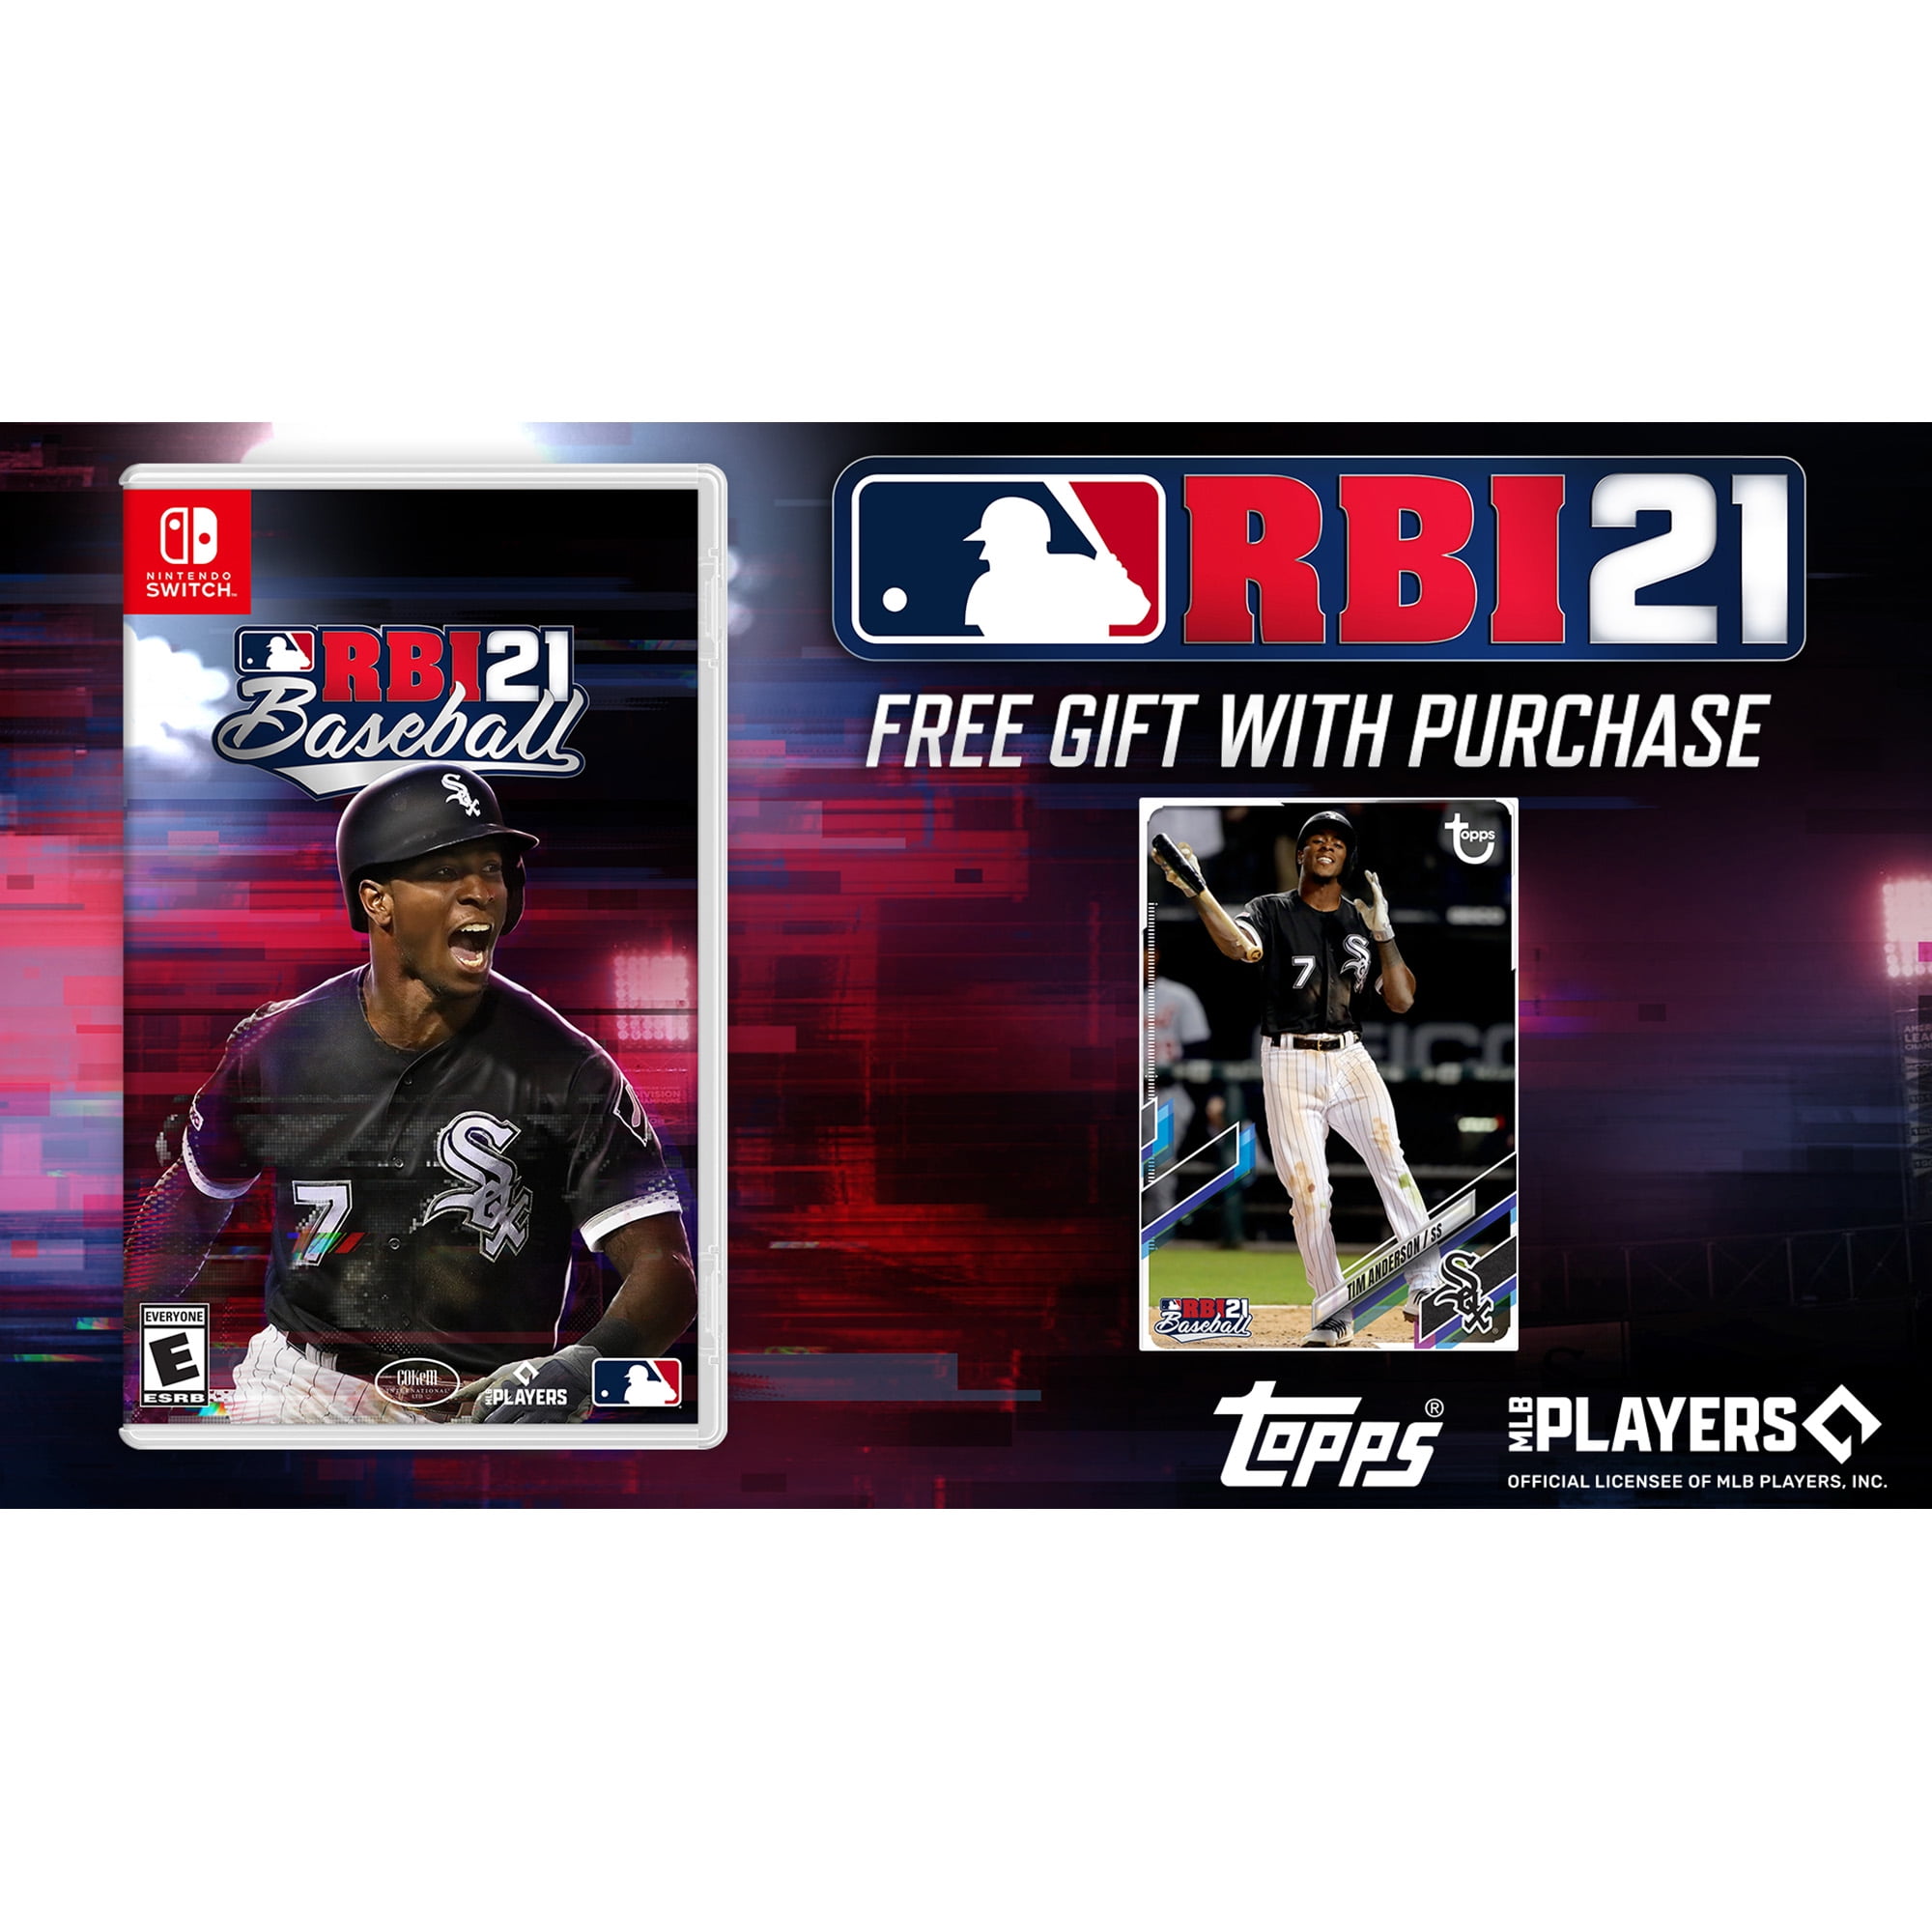 MLB RBI Baseball 21 with Bonus Topps Foil Card, Major League Baseball